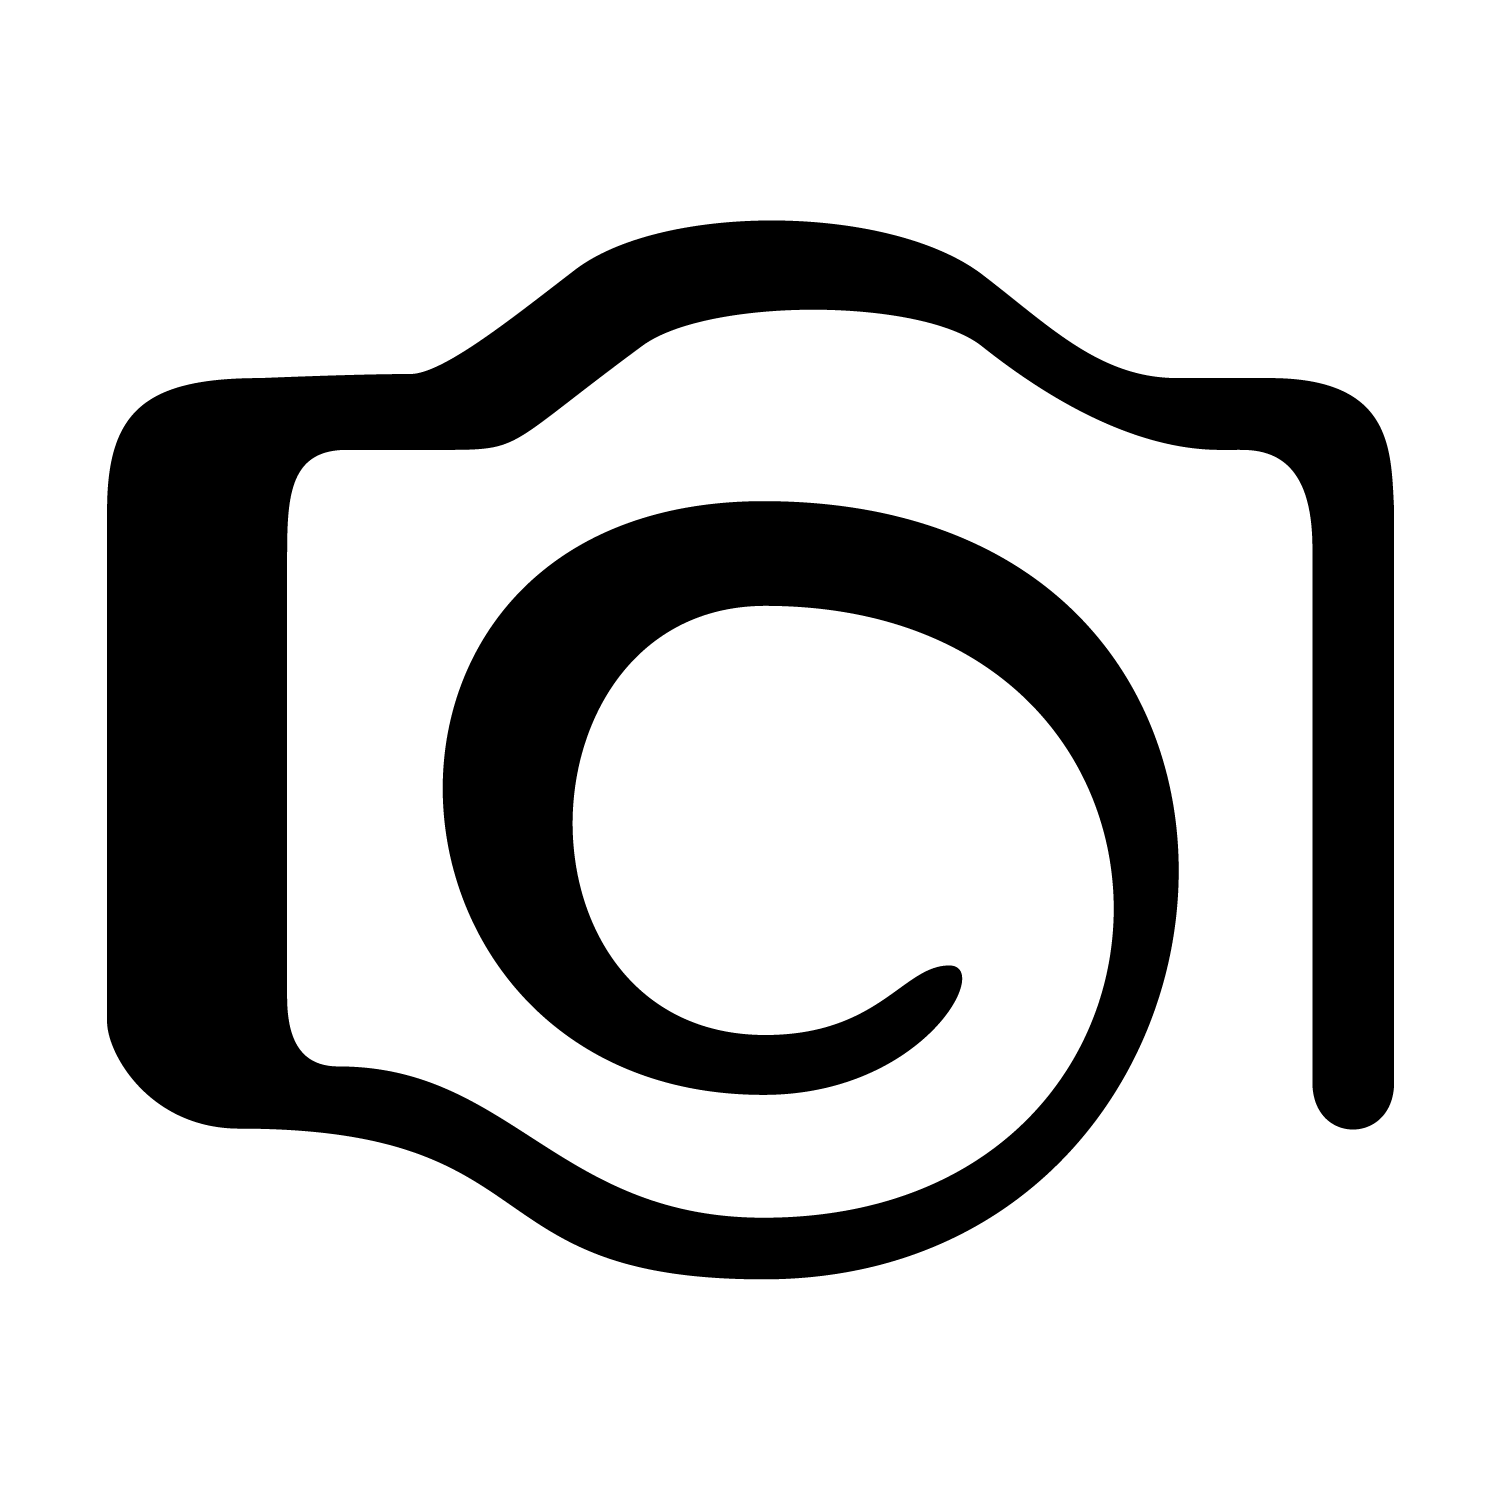  Photography  Logo  PNG  Images Photography  Camera Logos  Free 